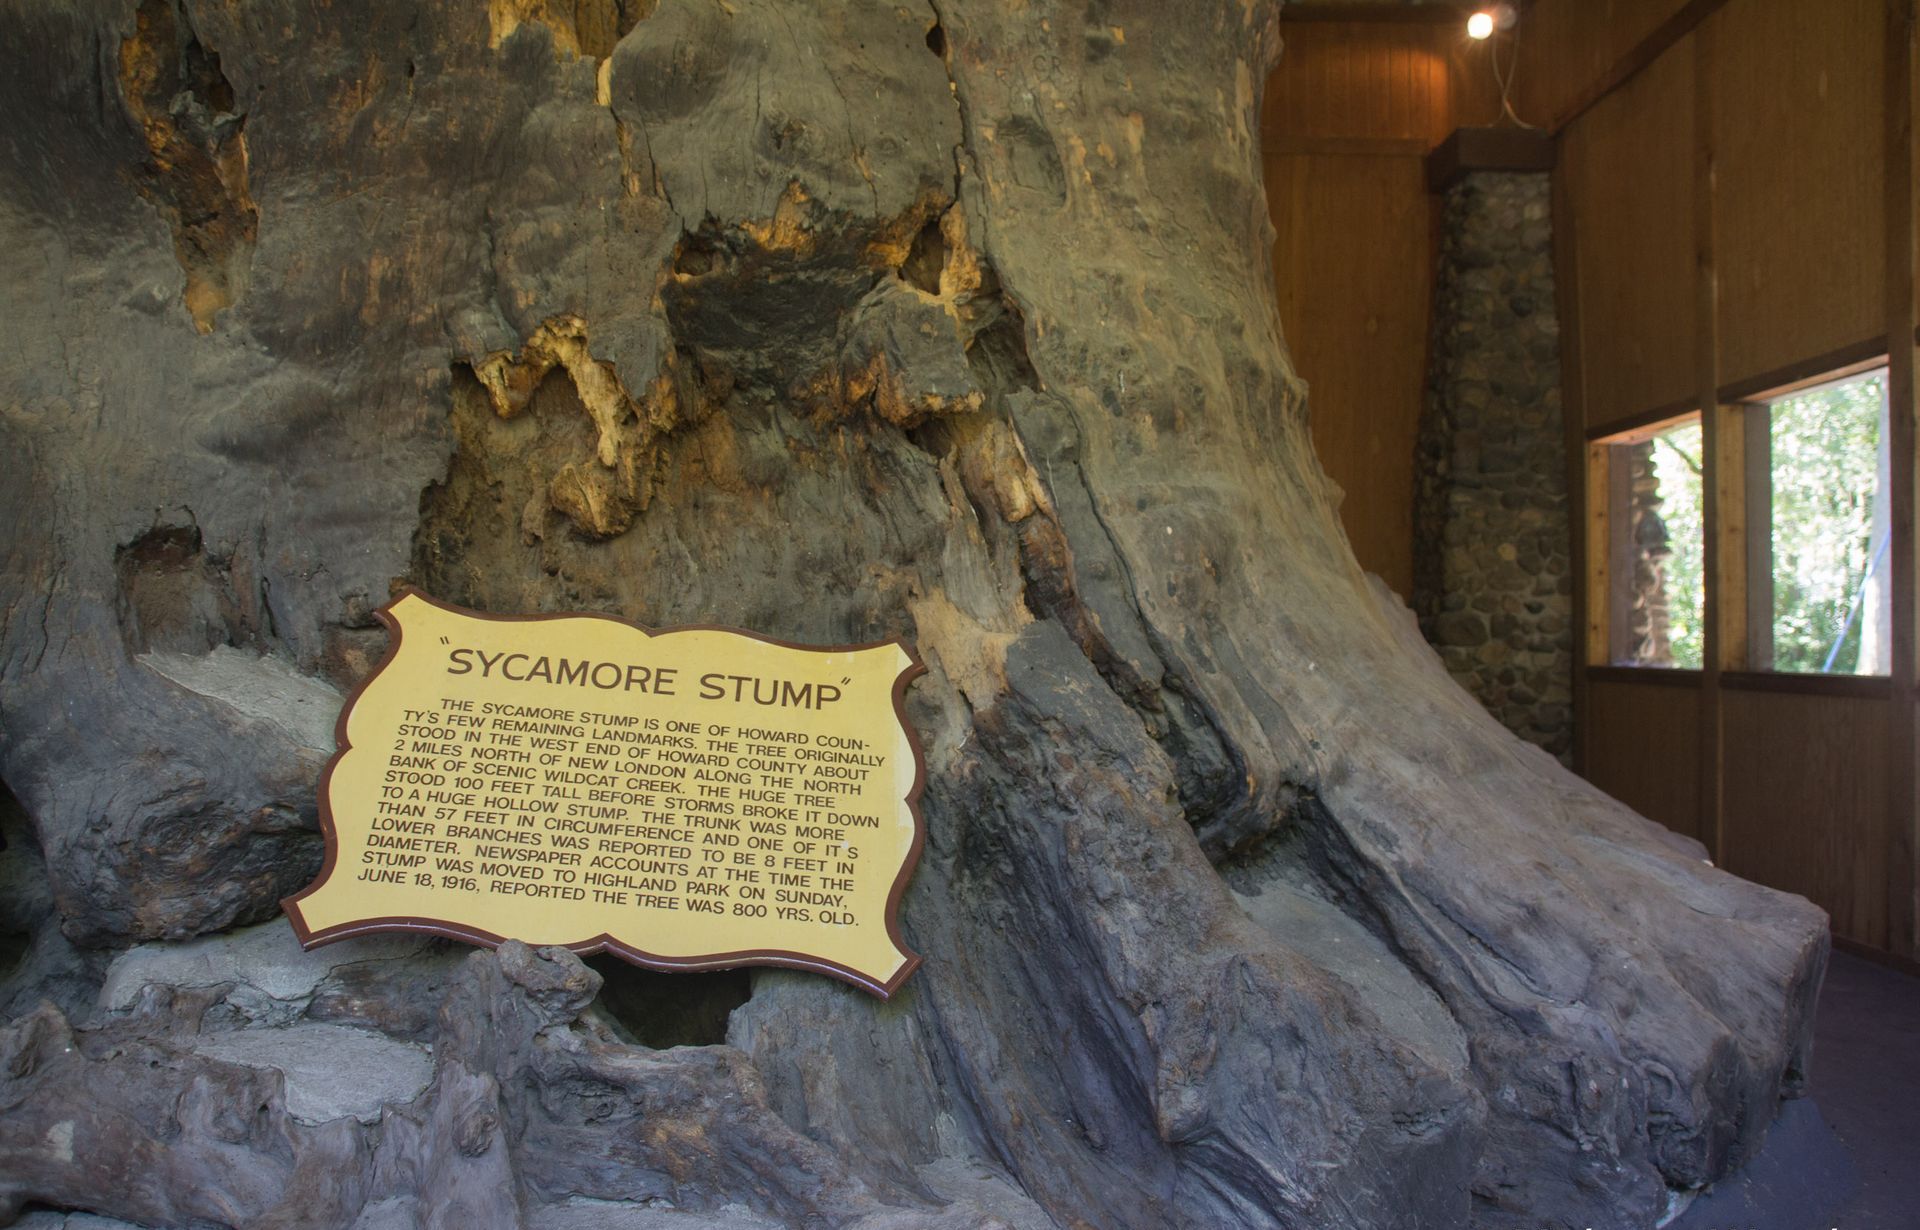 
World’s Largest Sycamore Stump: world record in Kokomo, Indiana